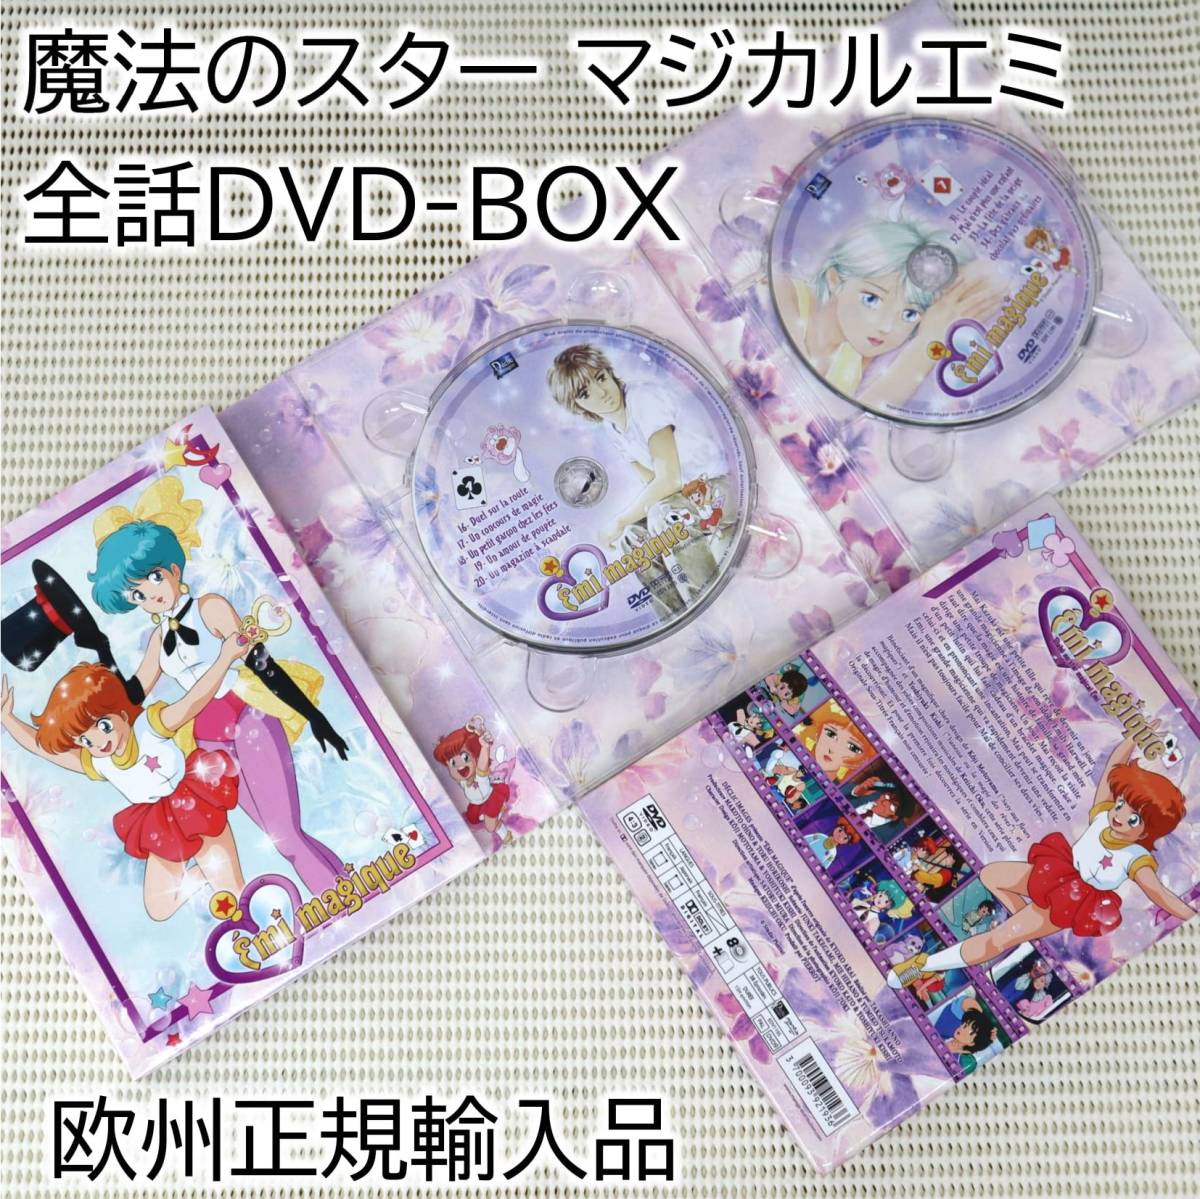 【DVD8枚】魔法のスター マジカルエミ 全話 コンプリートBOX (欧州正規品・映像方式PAL・全ディスク再生確認)